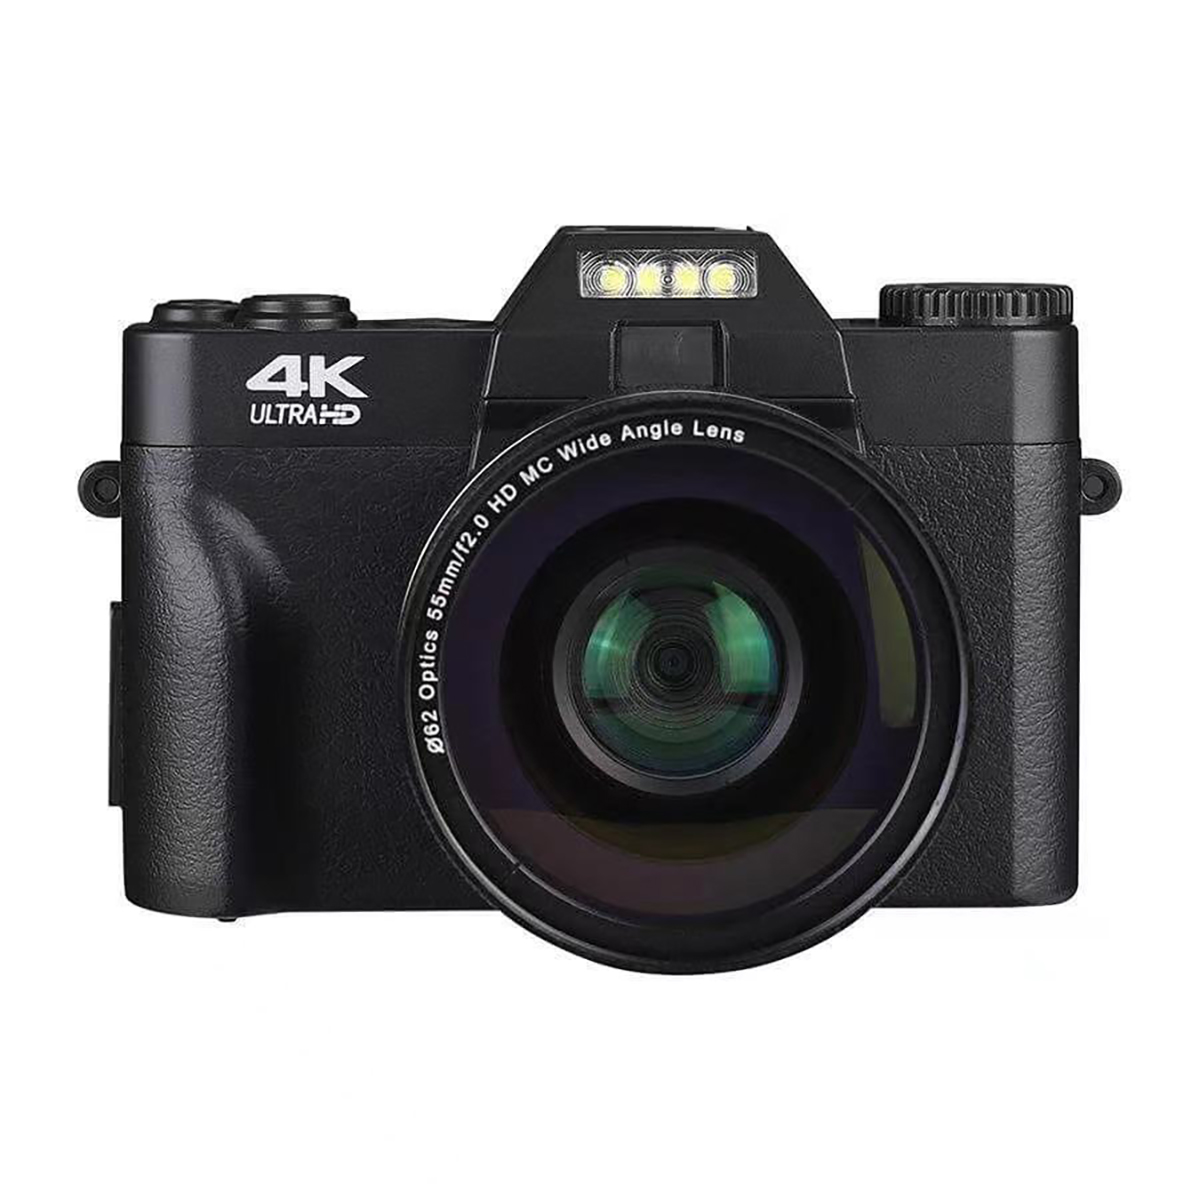 FINE LIFE Digital Speicherkarte 64G 30FPS 4K HD Schwarz Digitalkamera PRO Kamera